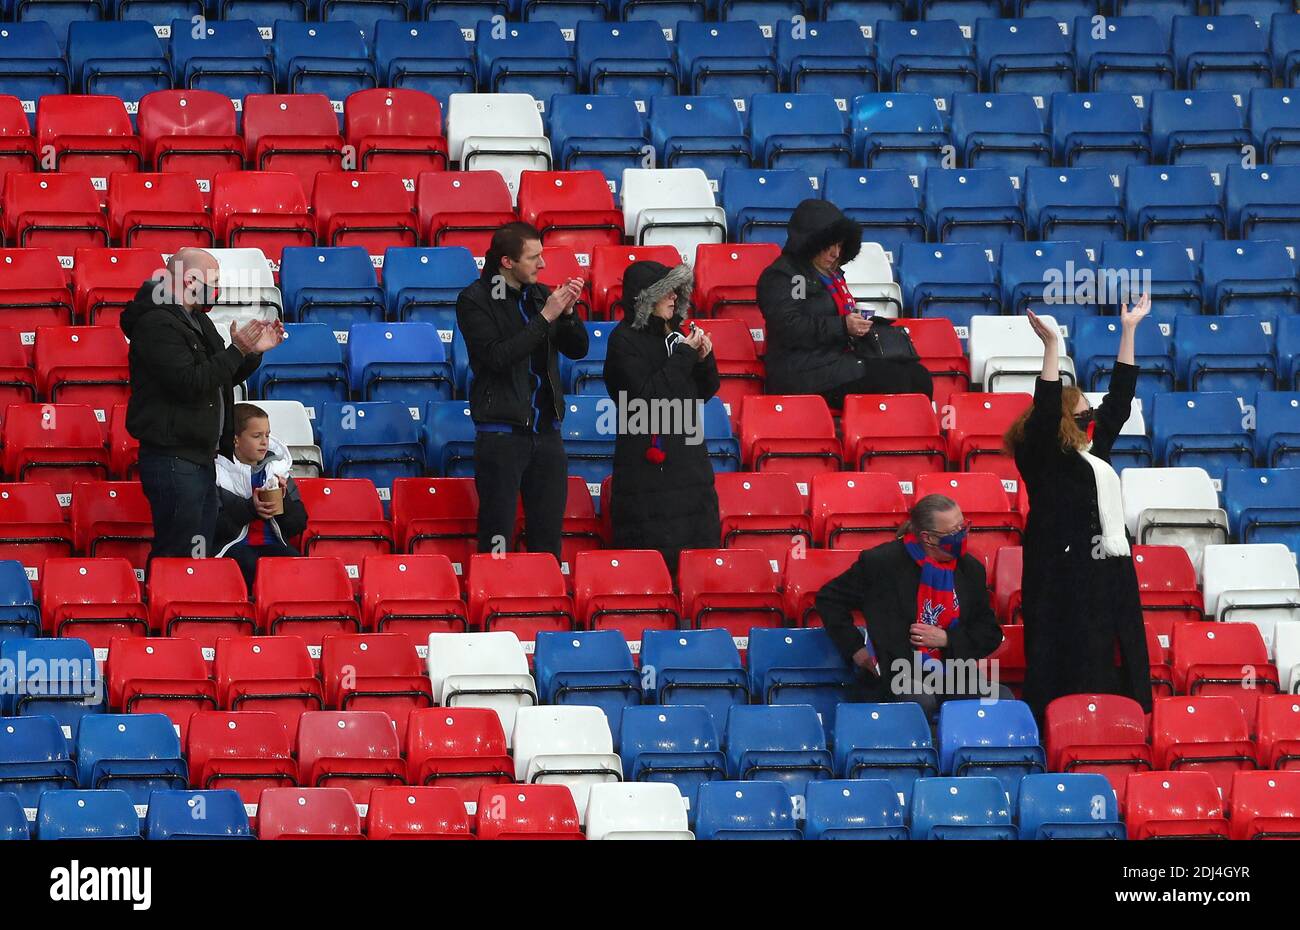 Los fans de Crystal Palace aplaudieron a los jugadores antes del partido de la Premier League en Selhurst Park, Londres. Foto de stock